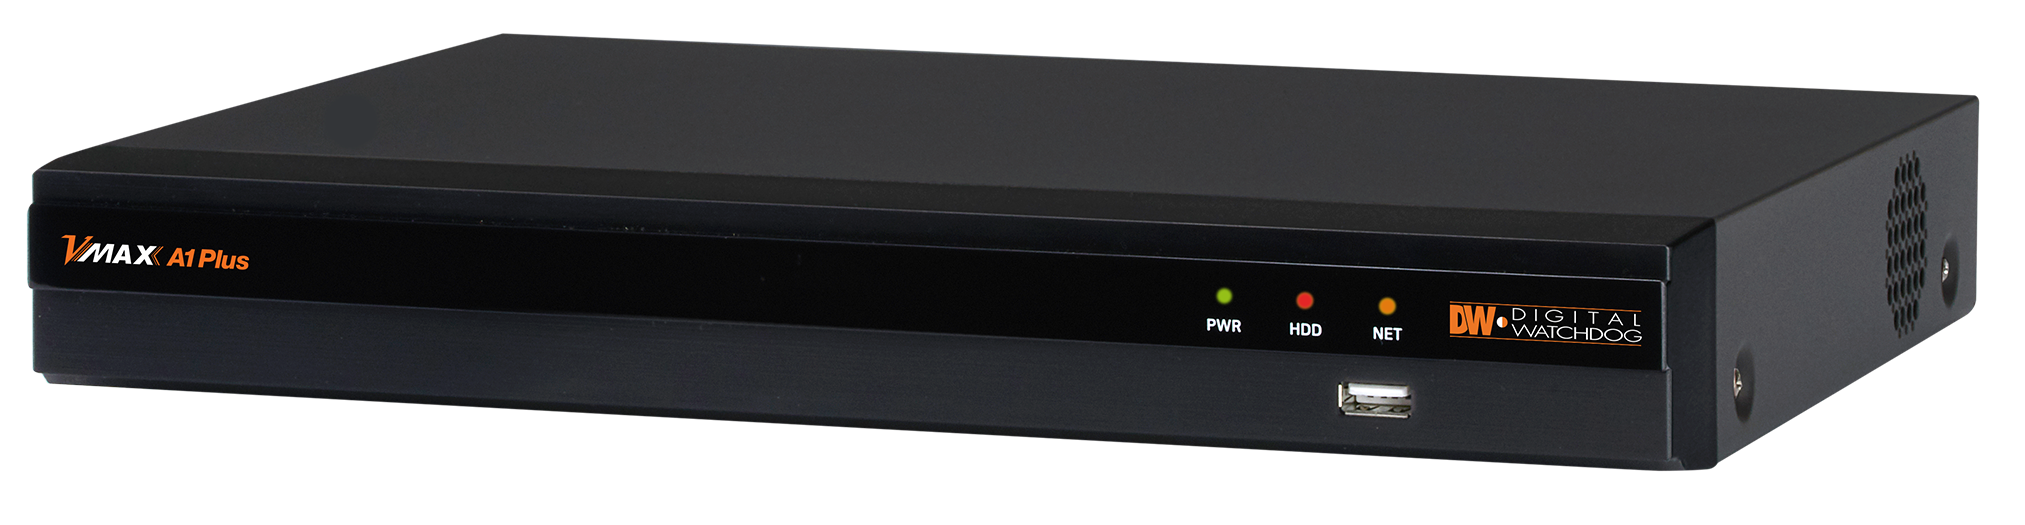 Digital Watchdog DW-VA1P41T  UHDoC - DVR 4ch 4 Channel Universal HD Over Coax DVR